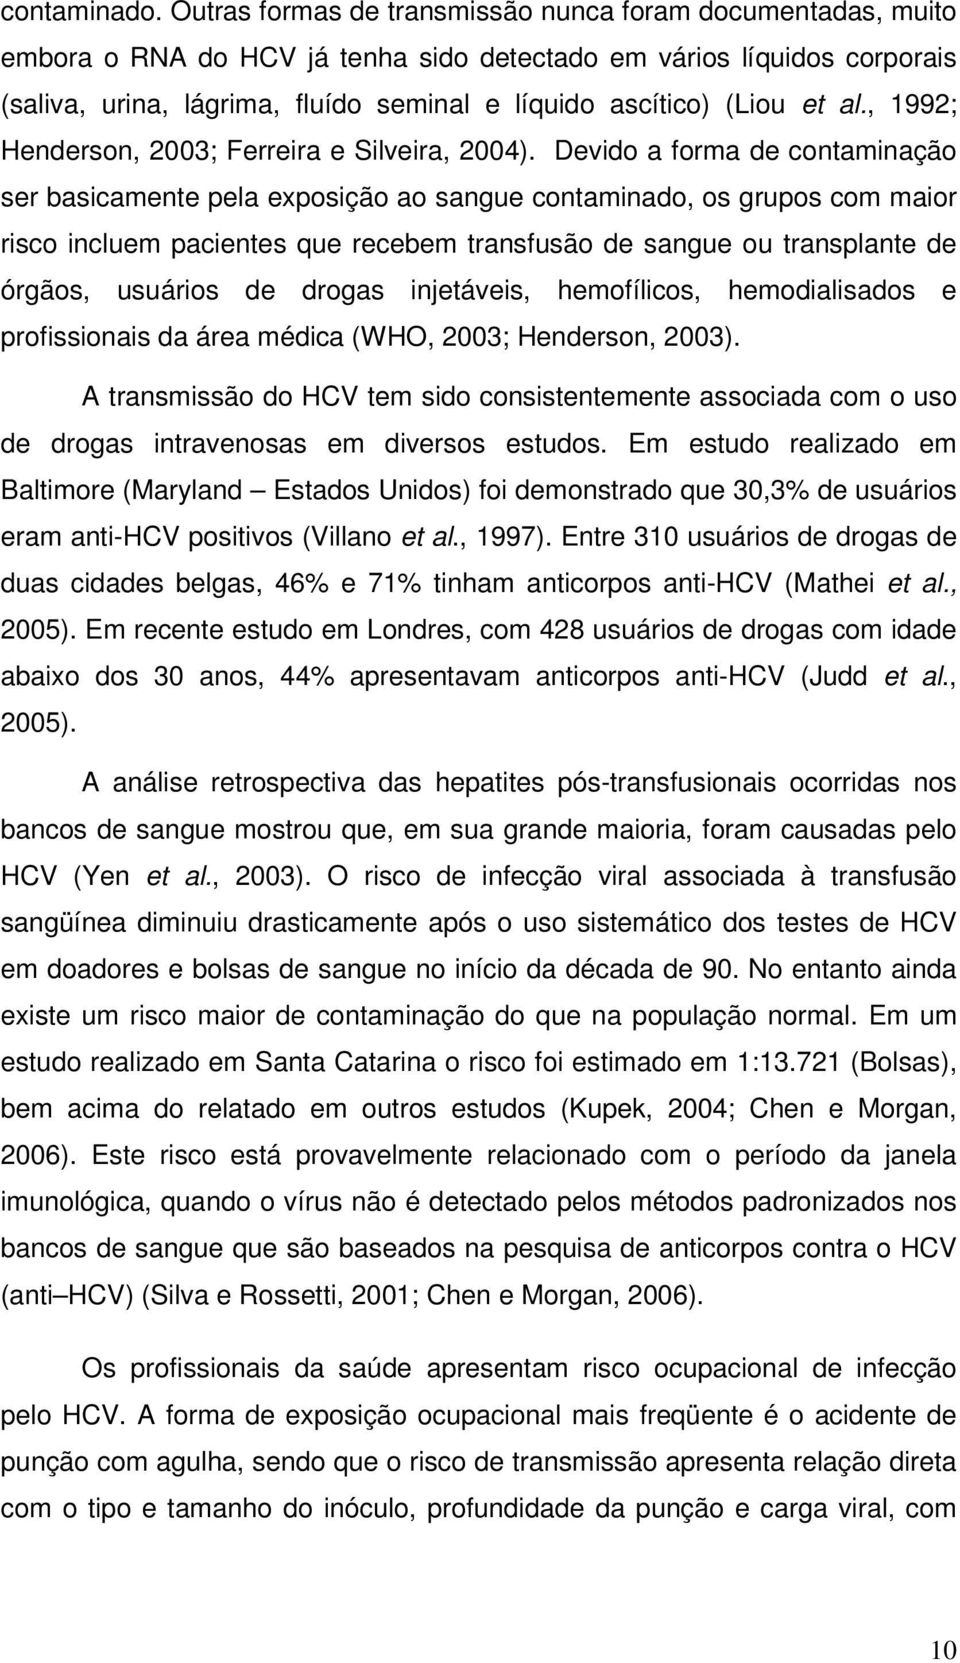 et al., 1992; Henderson, 2003; Ferreira e Silveira, 2004).